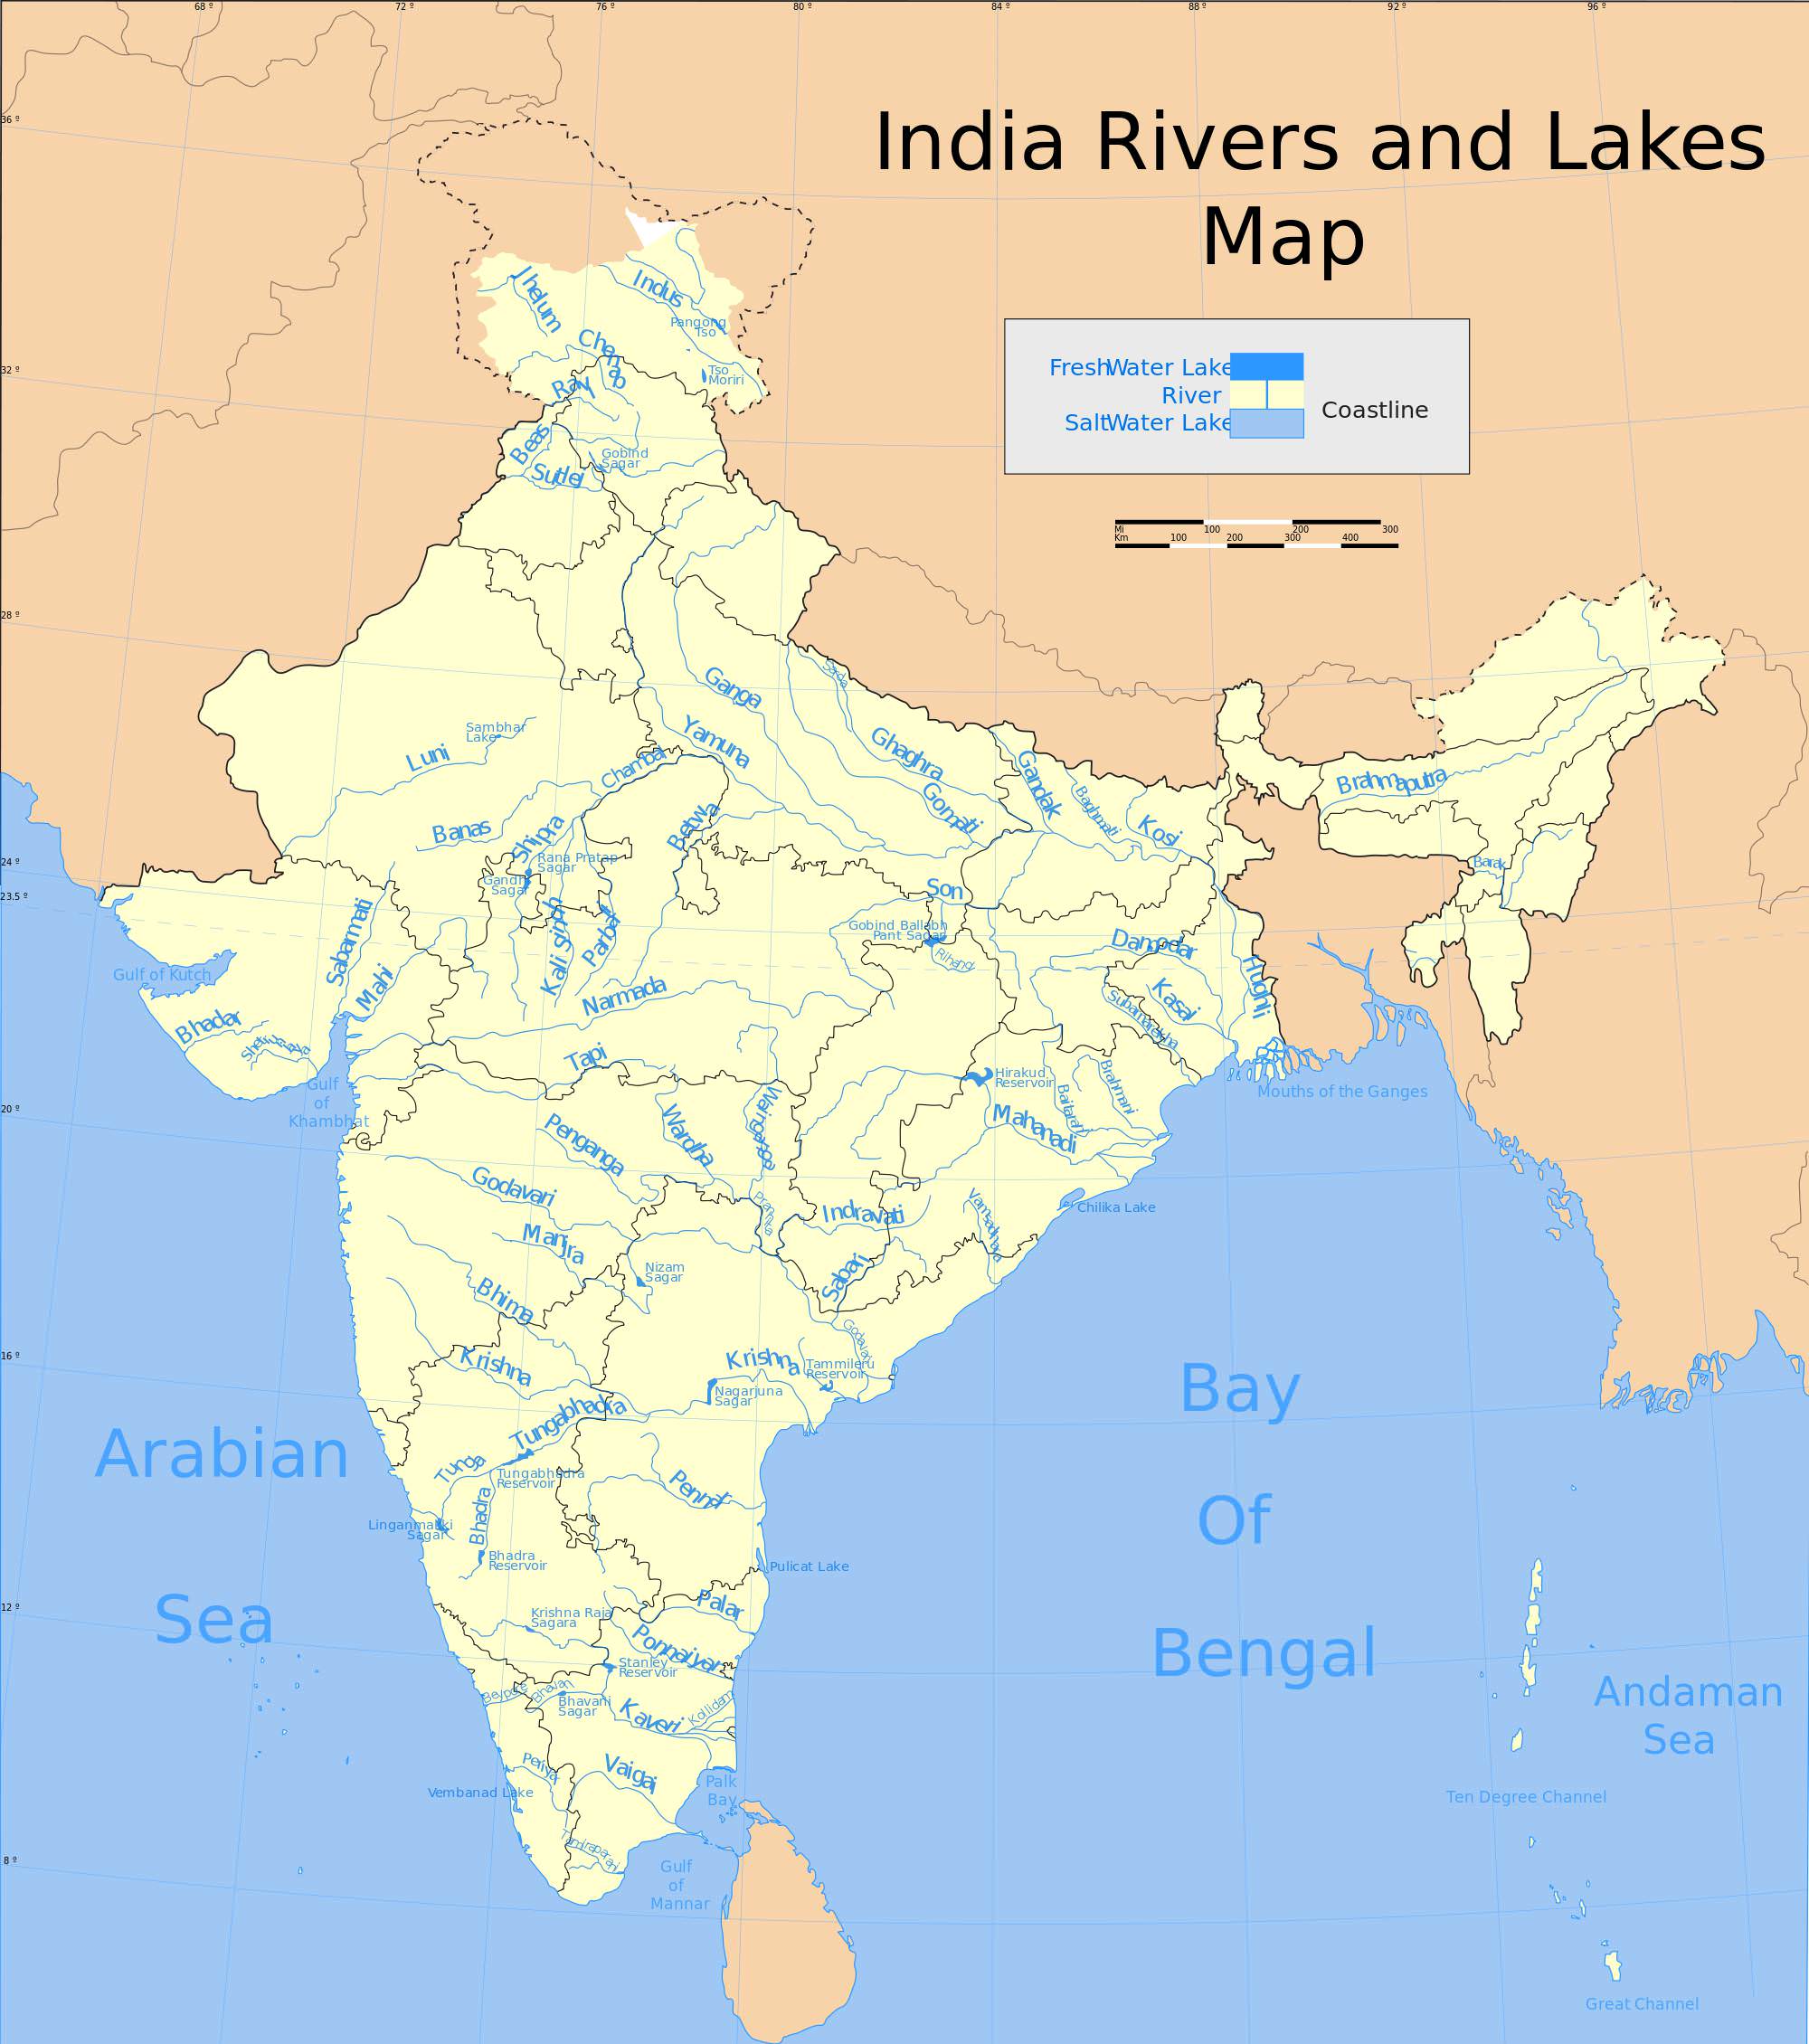 peninsular river system vs. himalayan river system | pmf ias